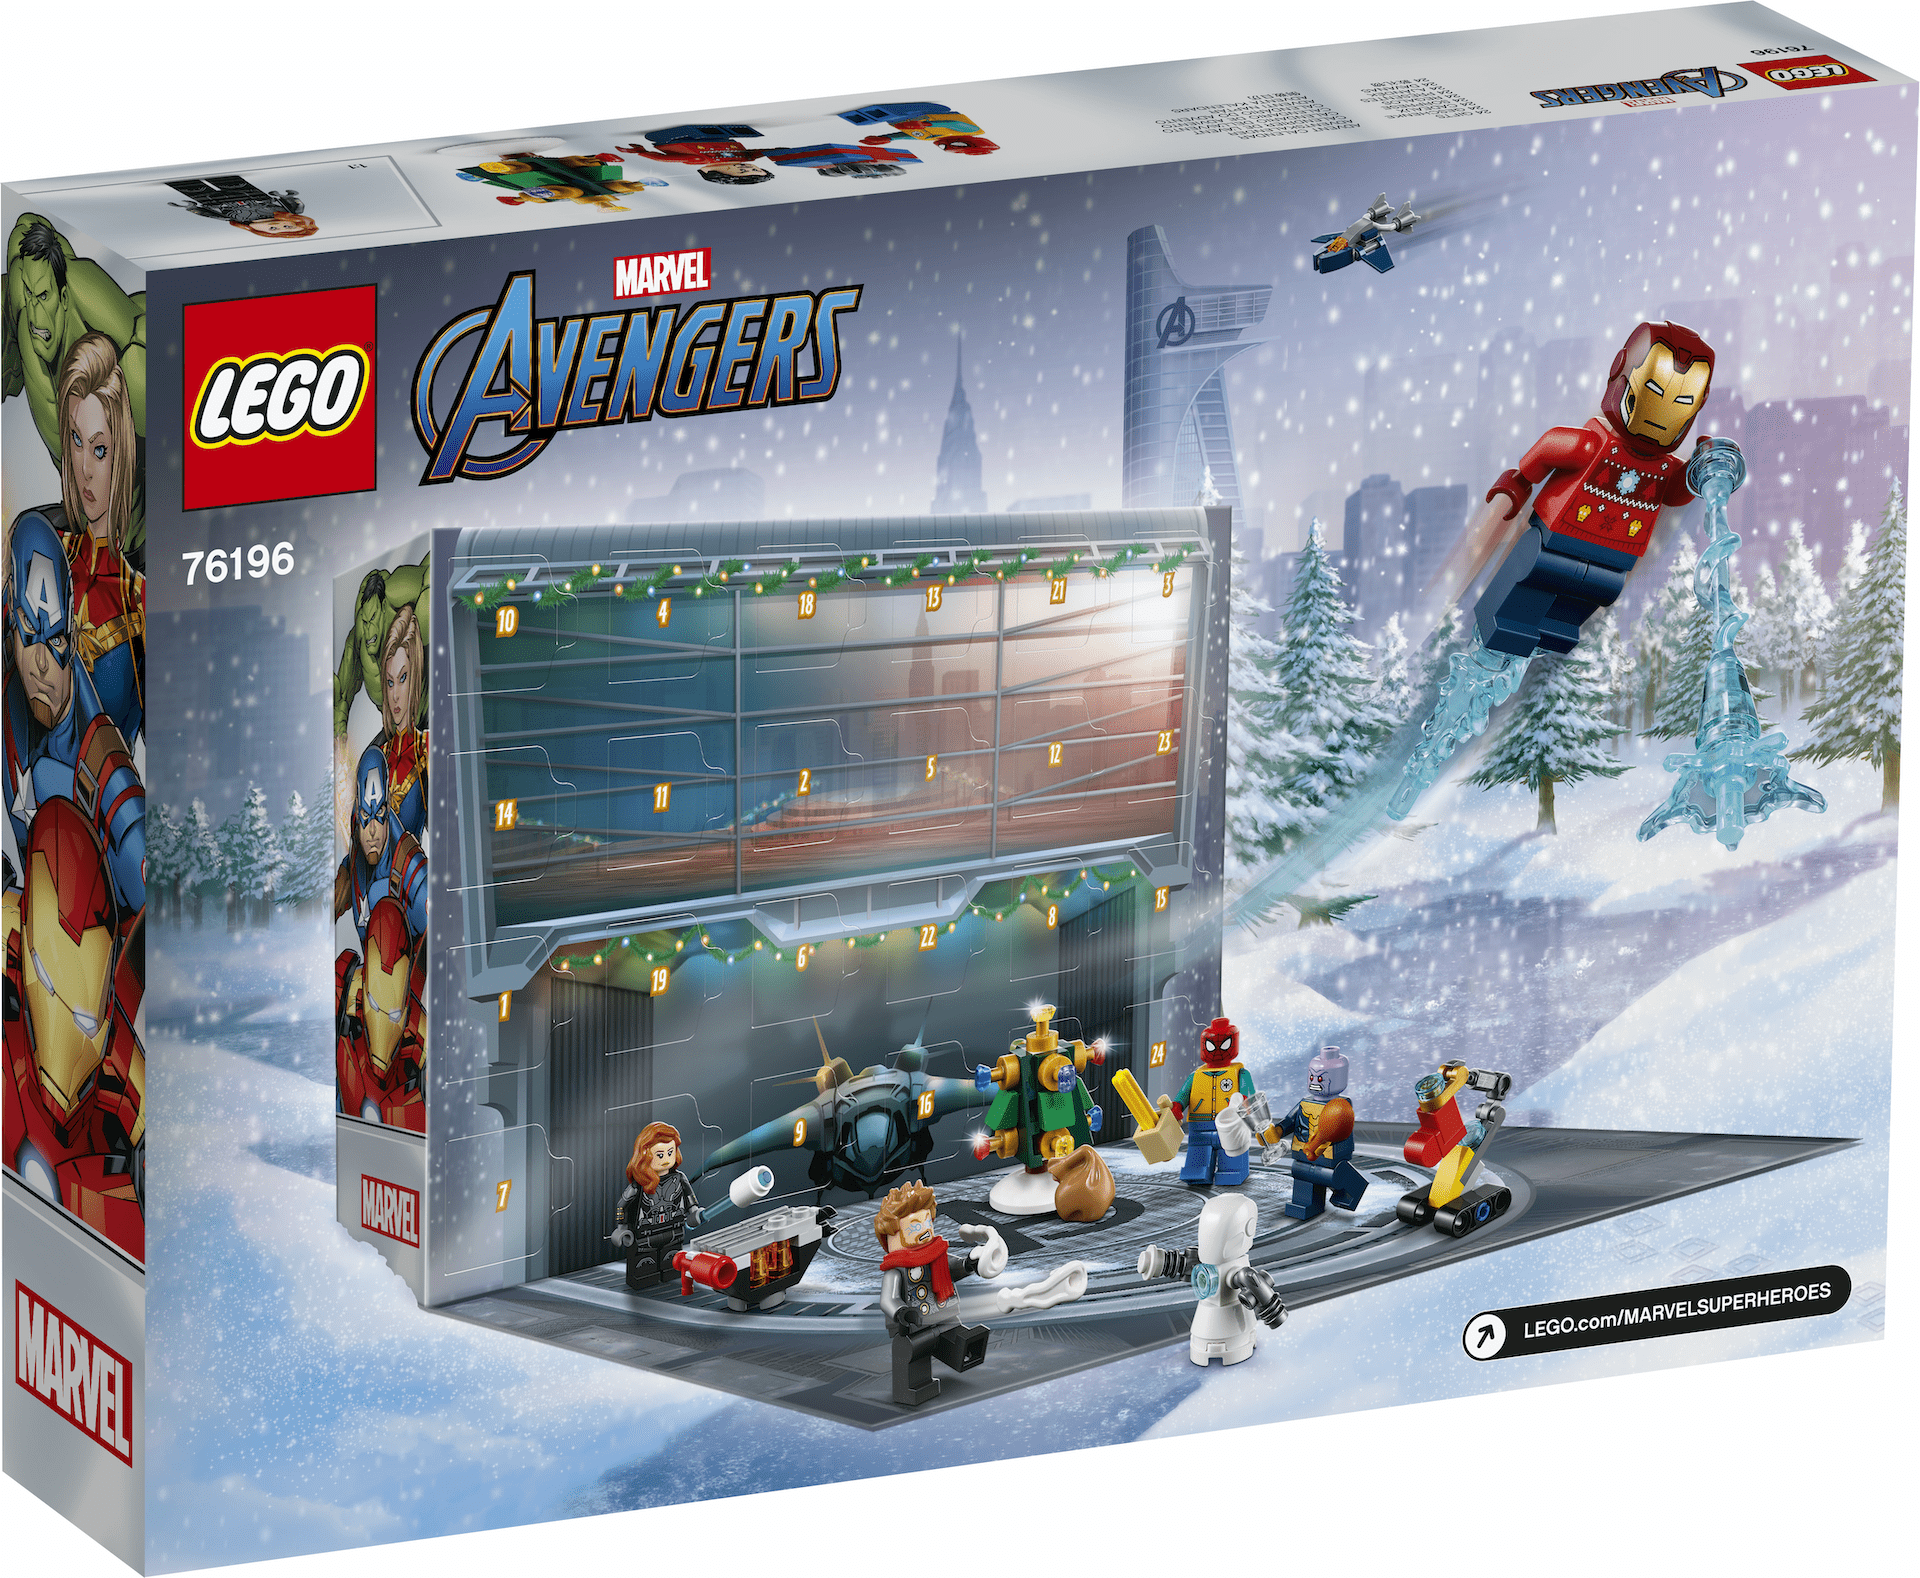 The 2021 LEGO Marvel Avengers Advent Calendar officially unveiled